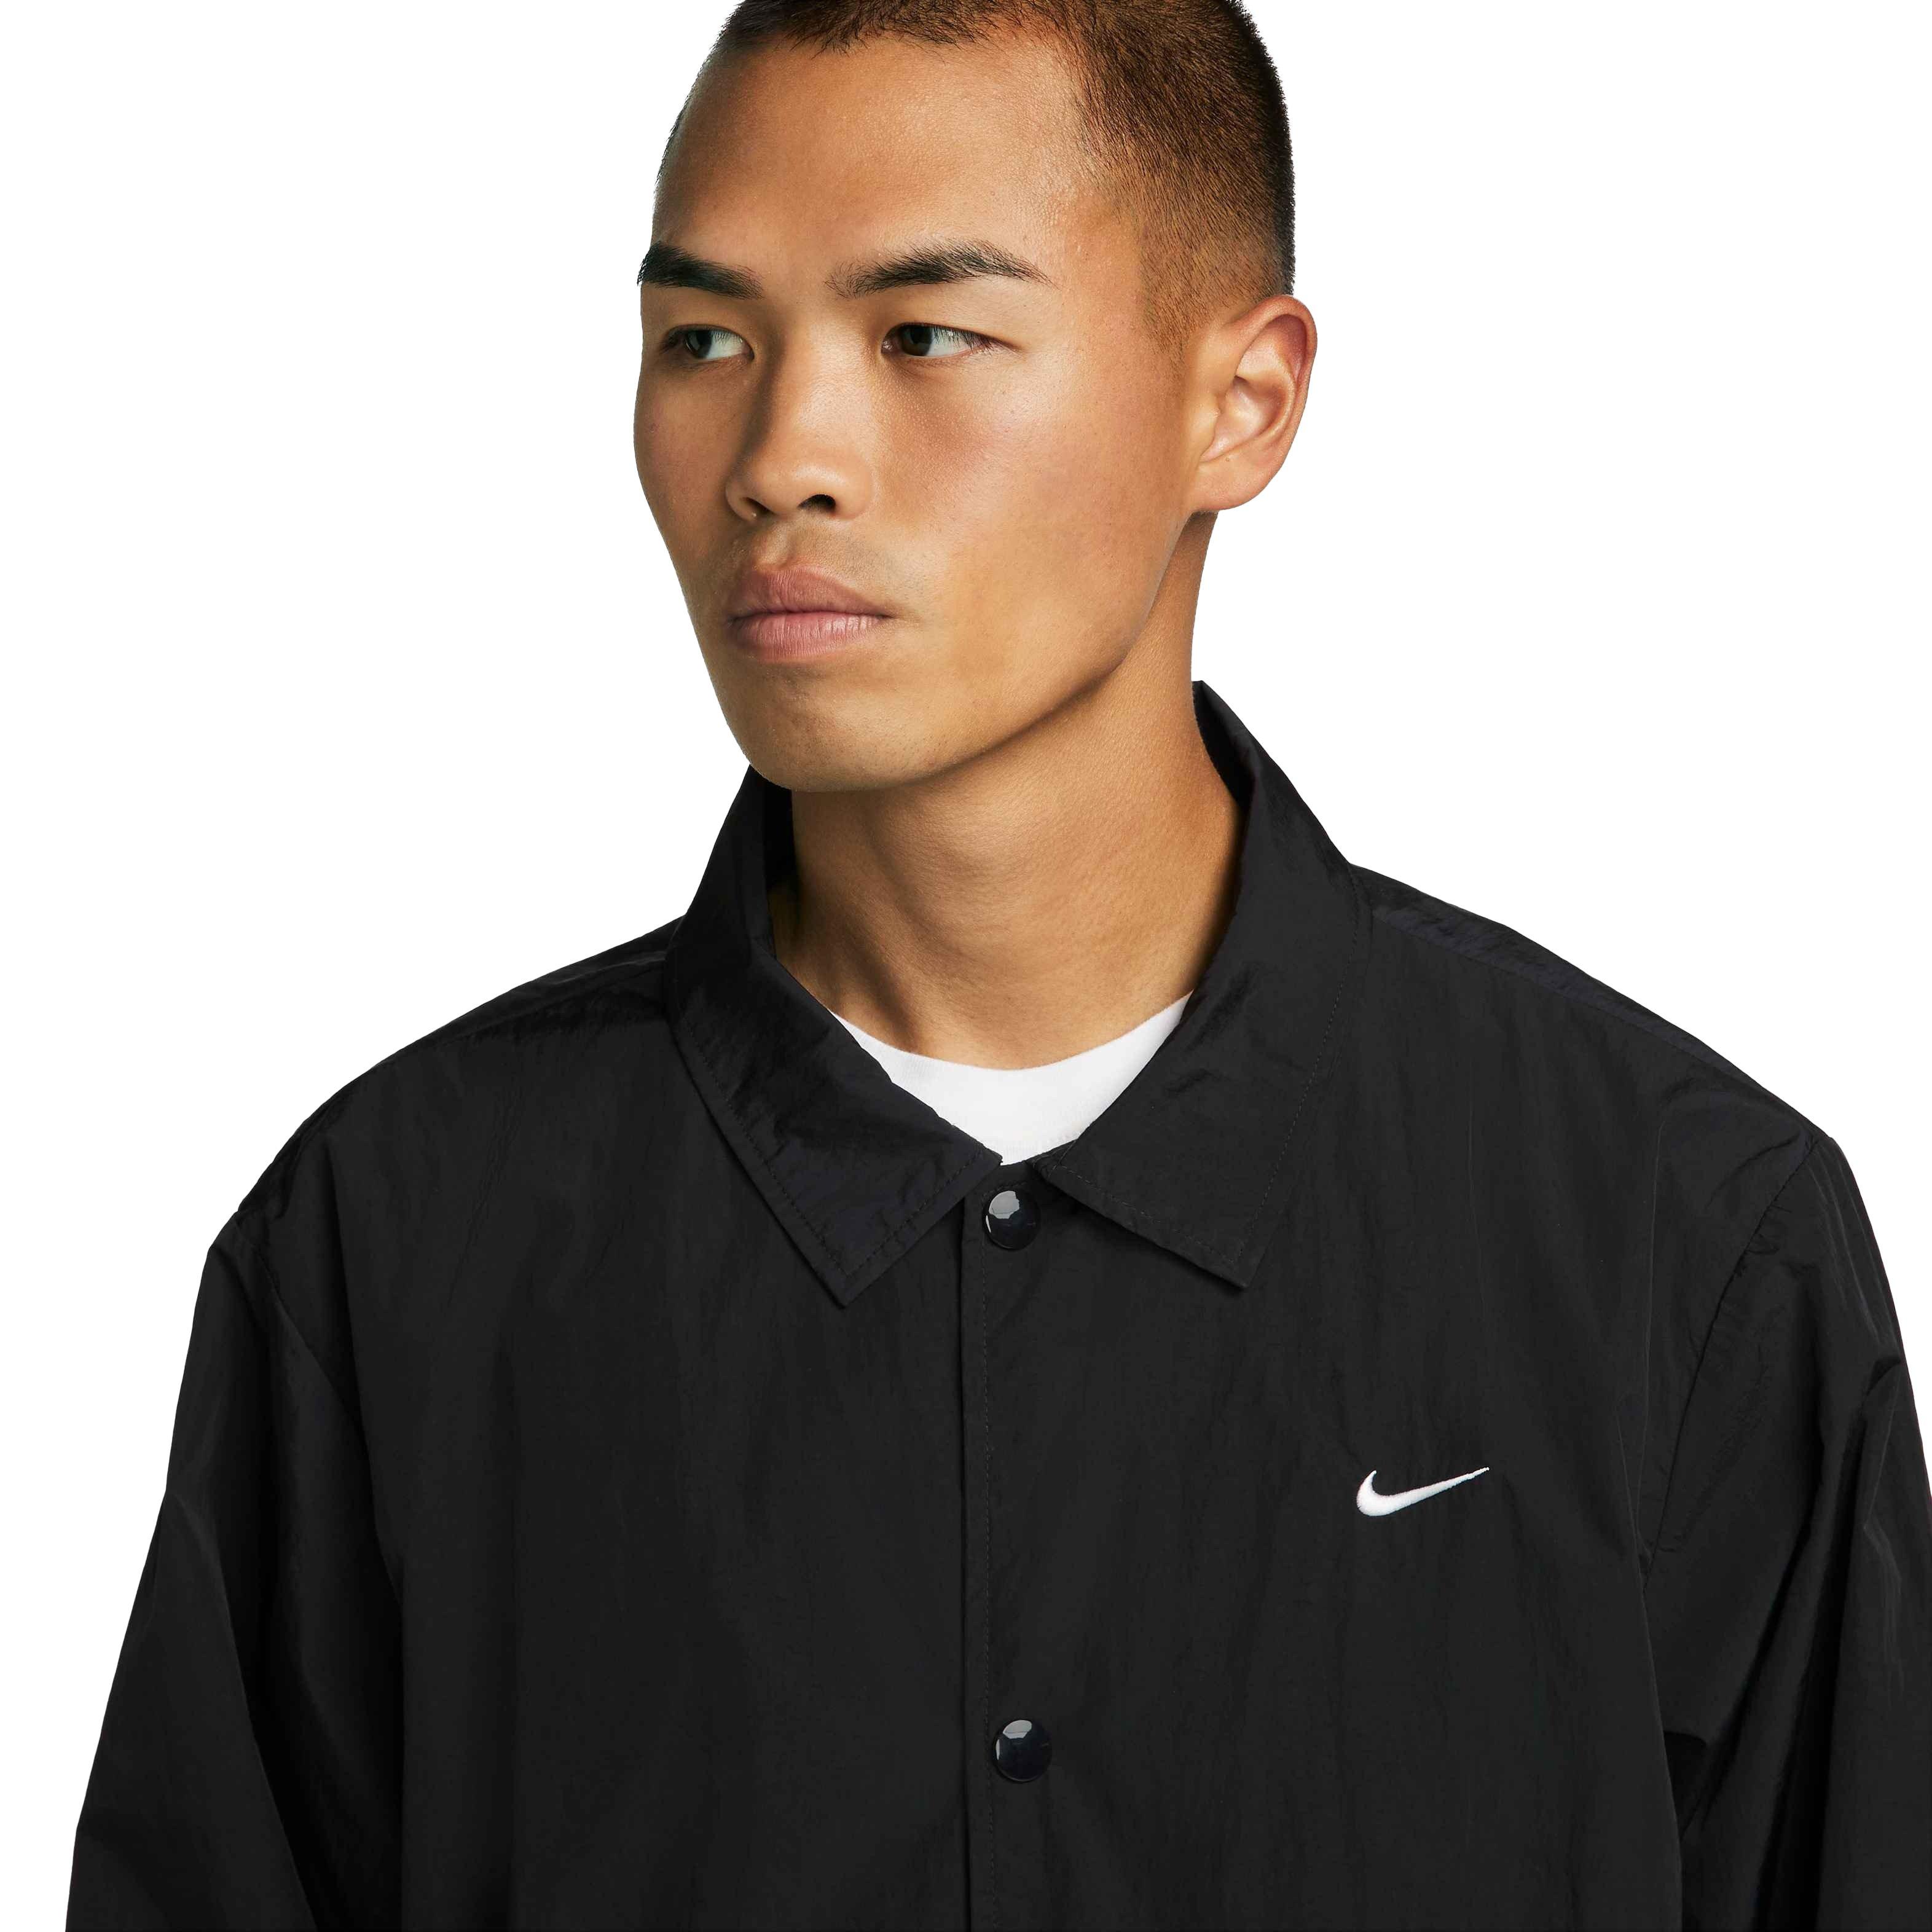 Nike Authentics Men's Lined Coaches Jacket.